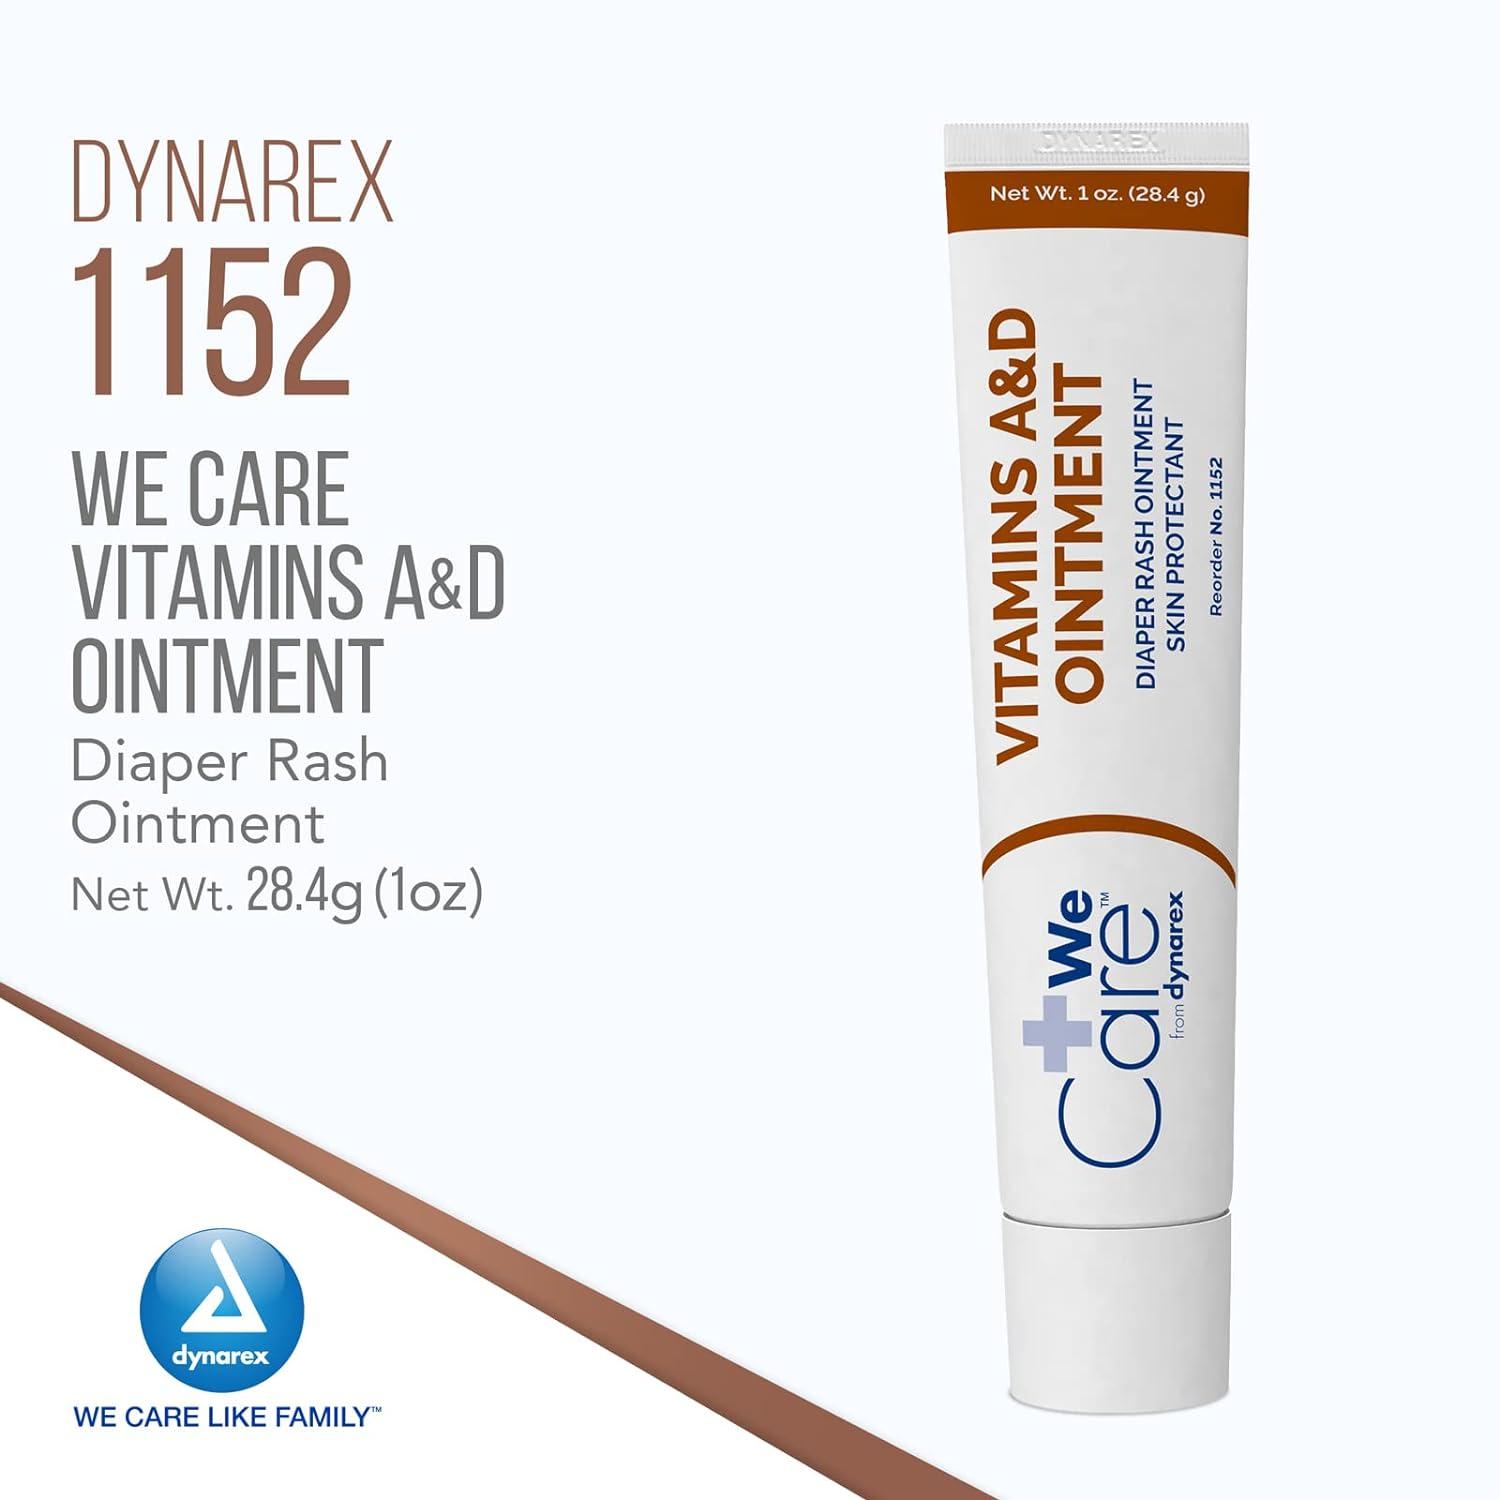 Dynarex A&D Ointment